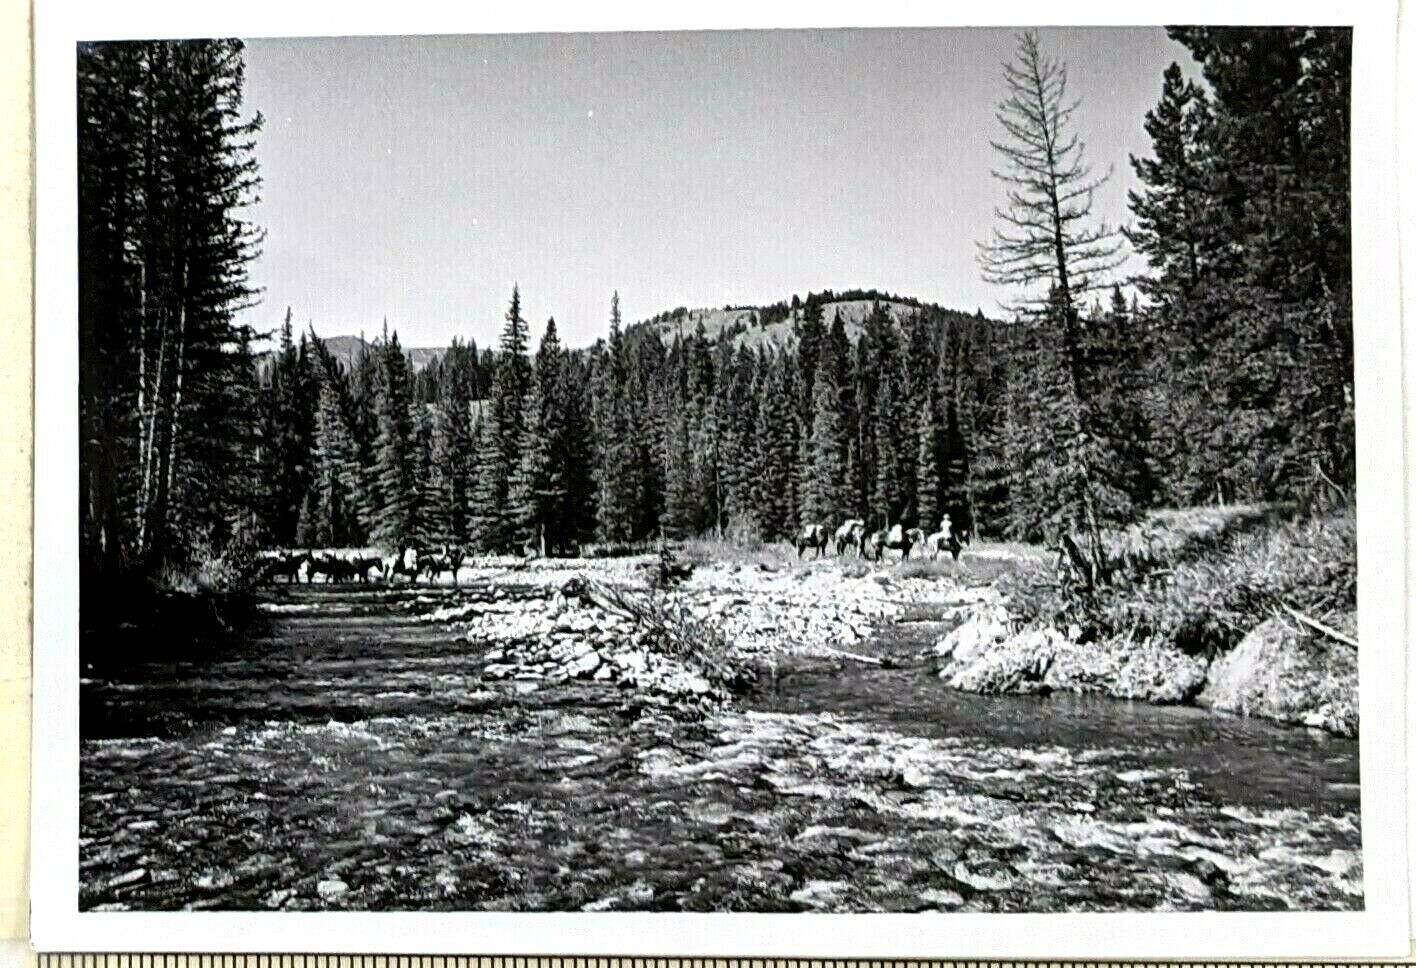 1970s Cowboys Ranchers Pack Horses Crossing Creek Western West Vintage Photo 